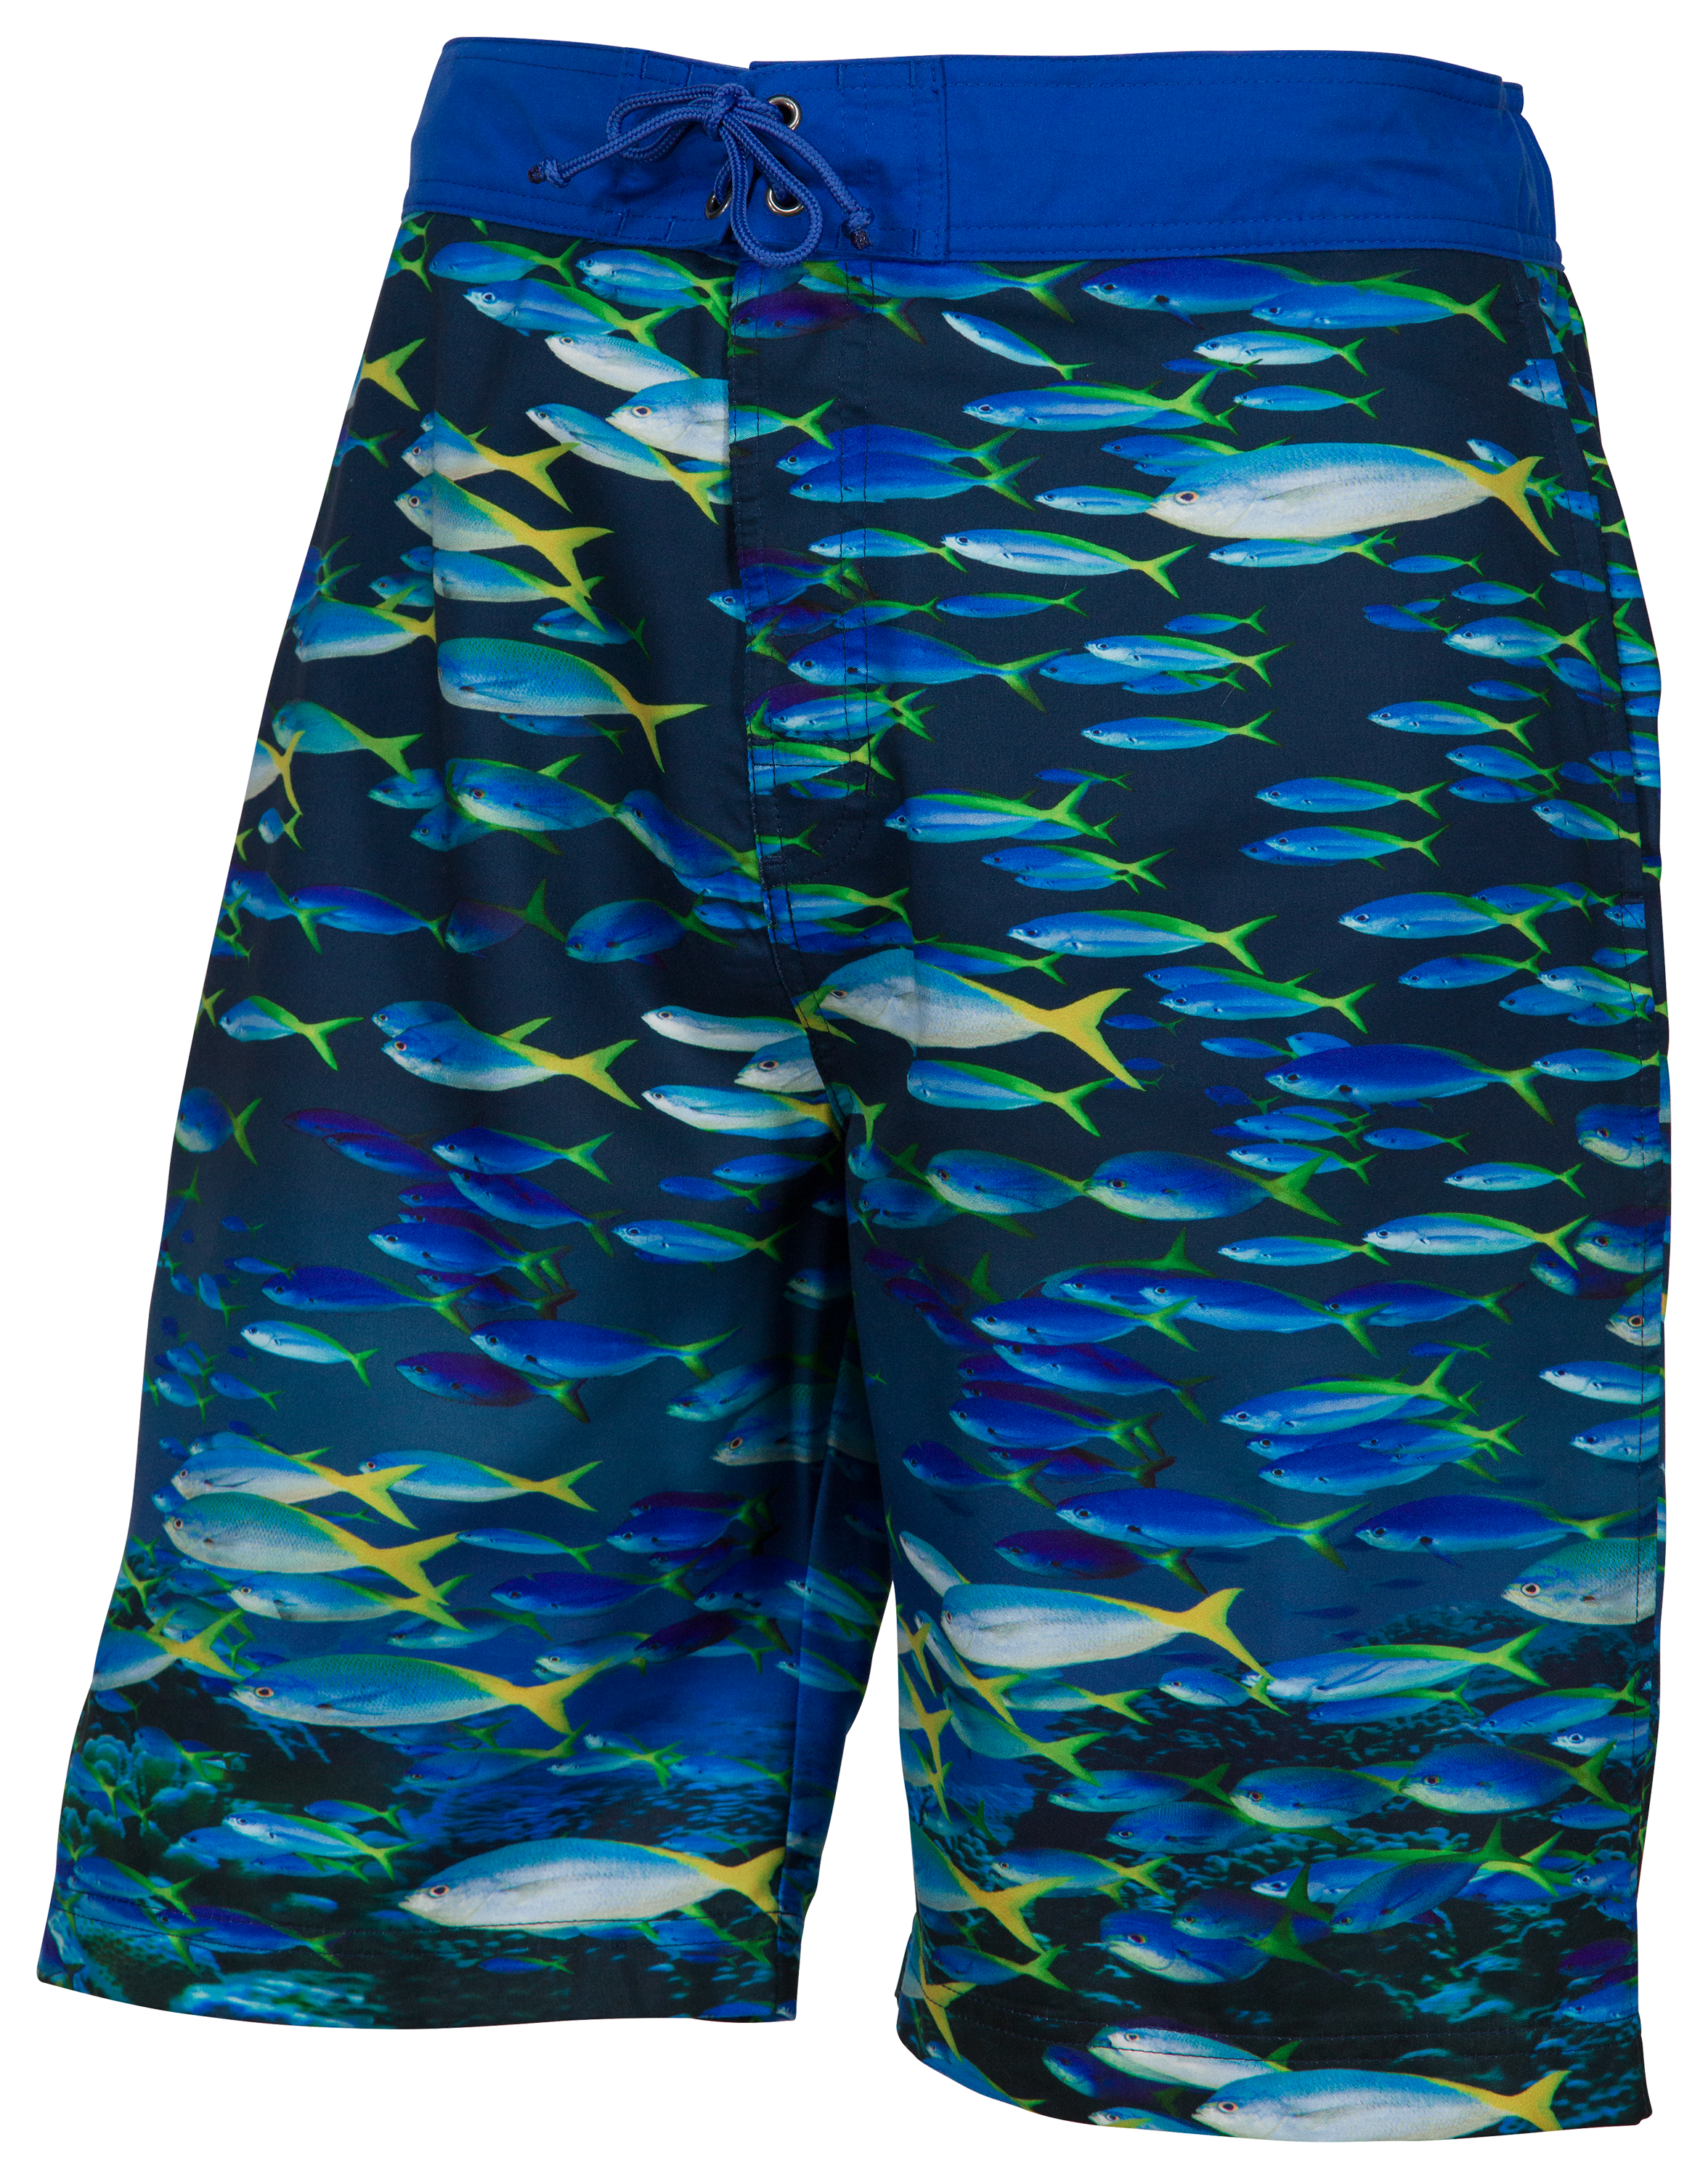 Bass Pro Shops Fish School Print Swim Trunks for Men